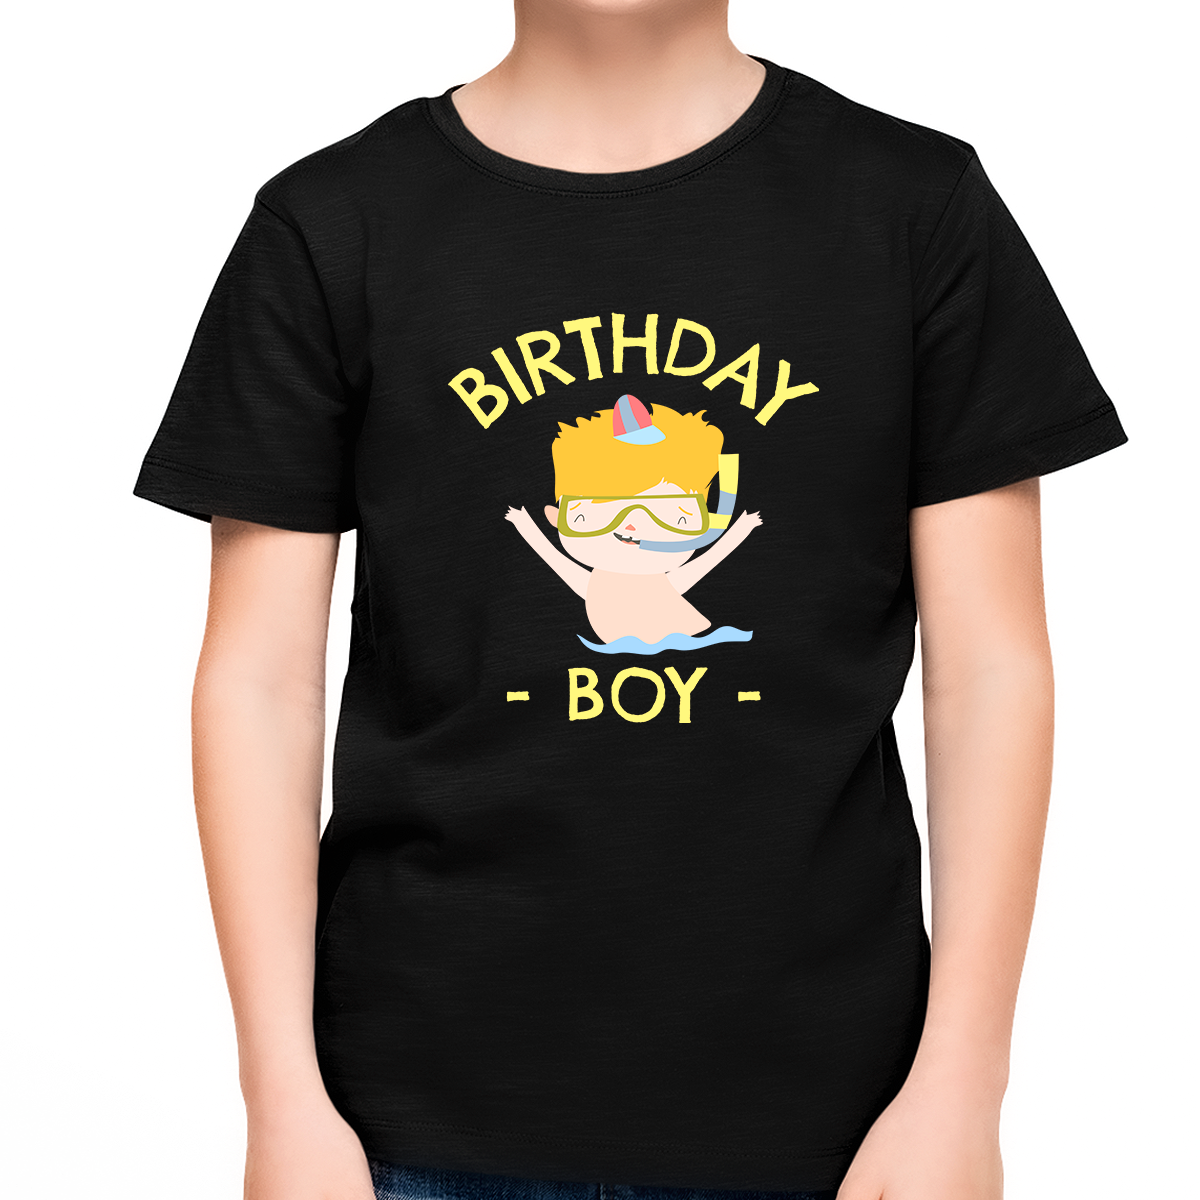 Funny Birthday Boy Shirt Birthday Boy Shirt Funny Birthday Shirt Birthday Boy Gift